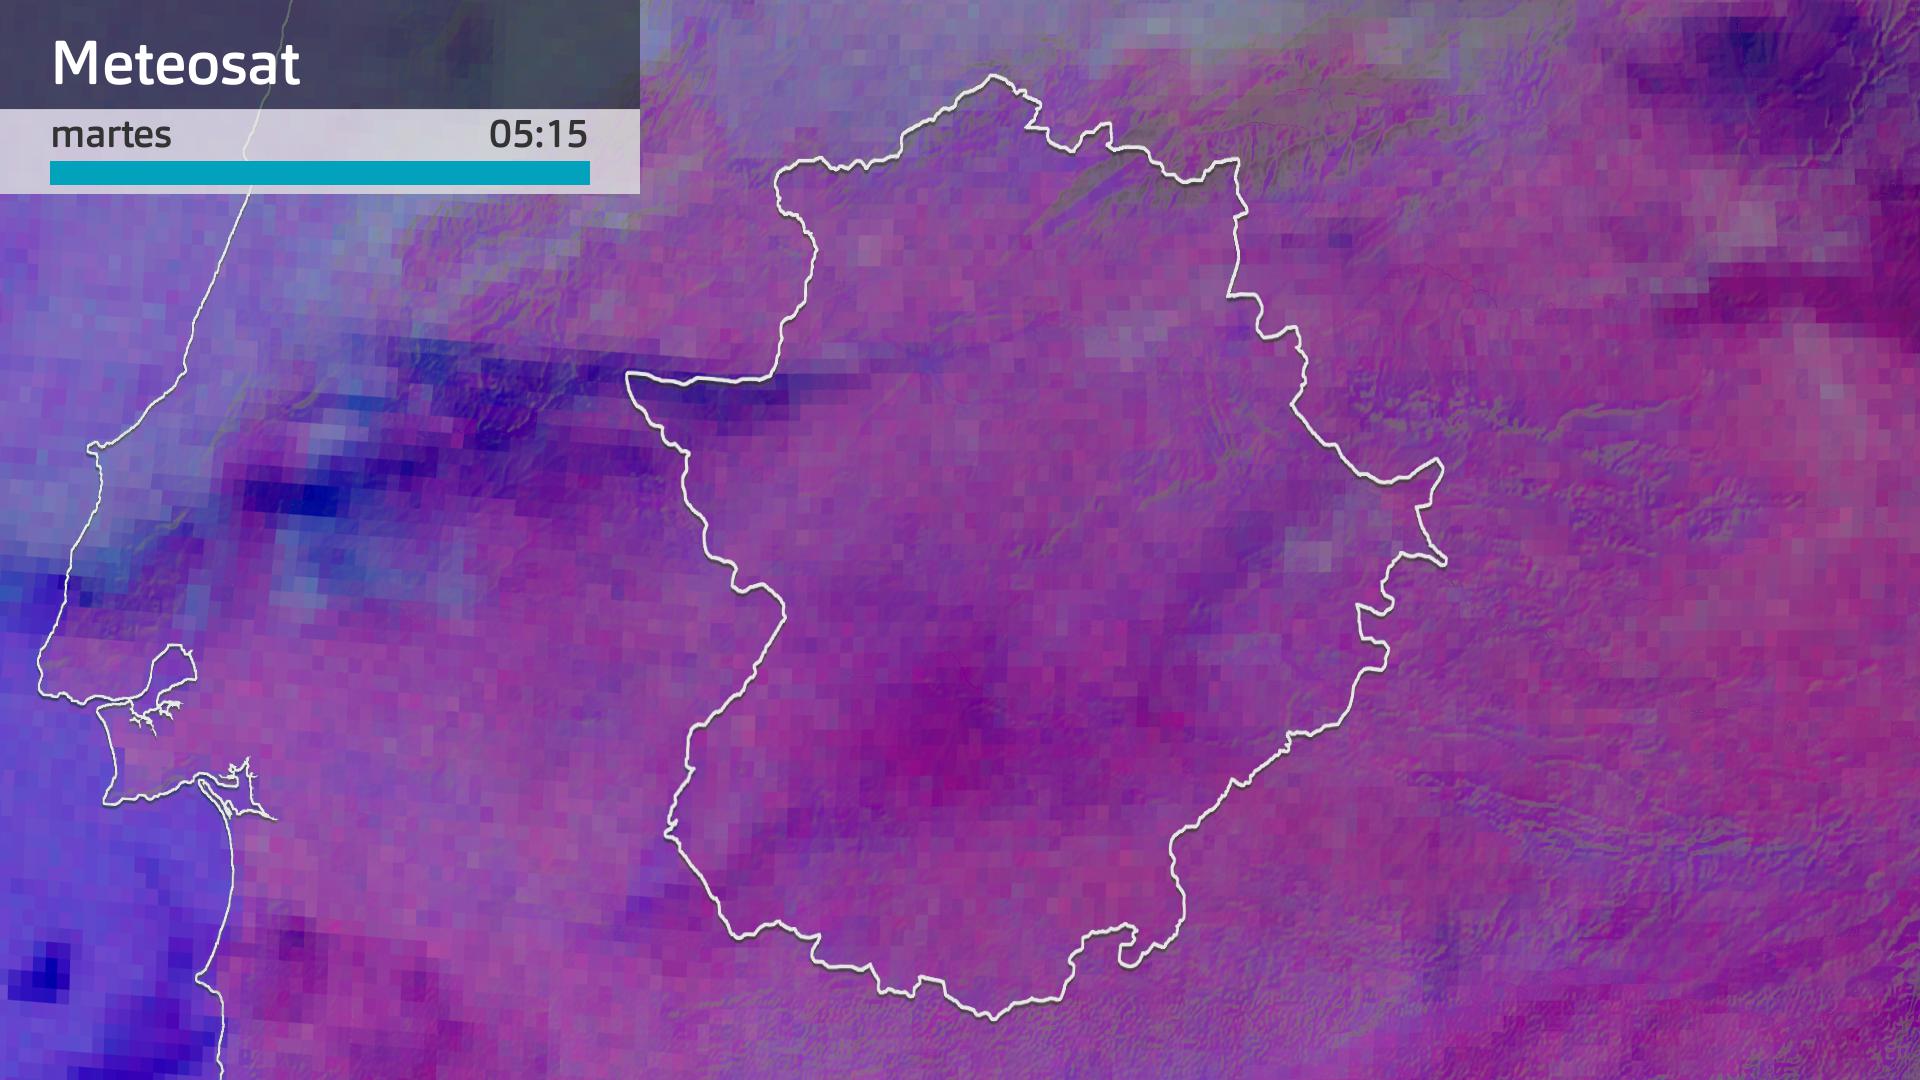 Imagen del Meteosat martes 23 de enero 5:15 h.